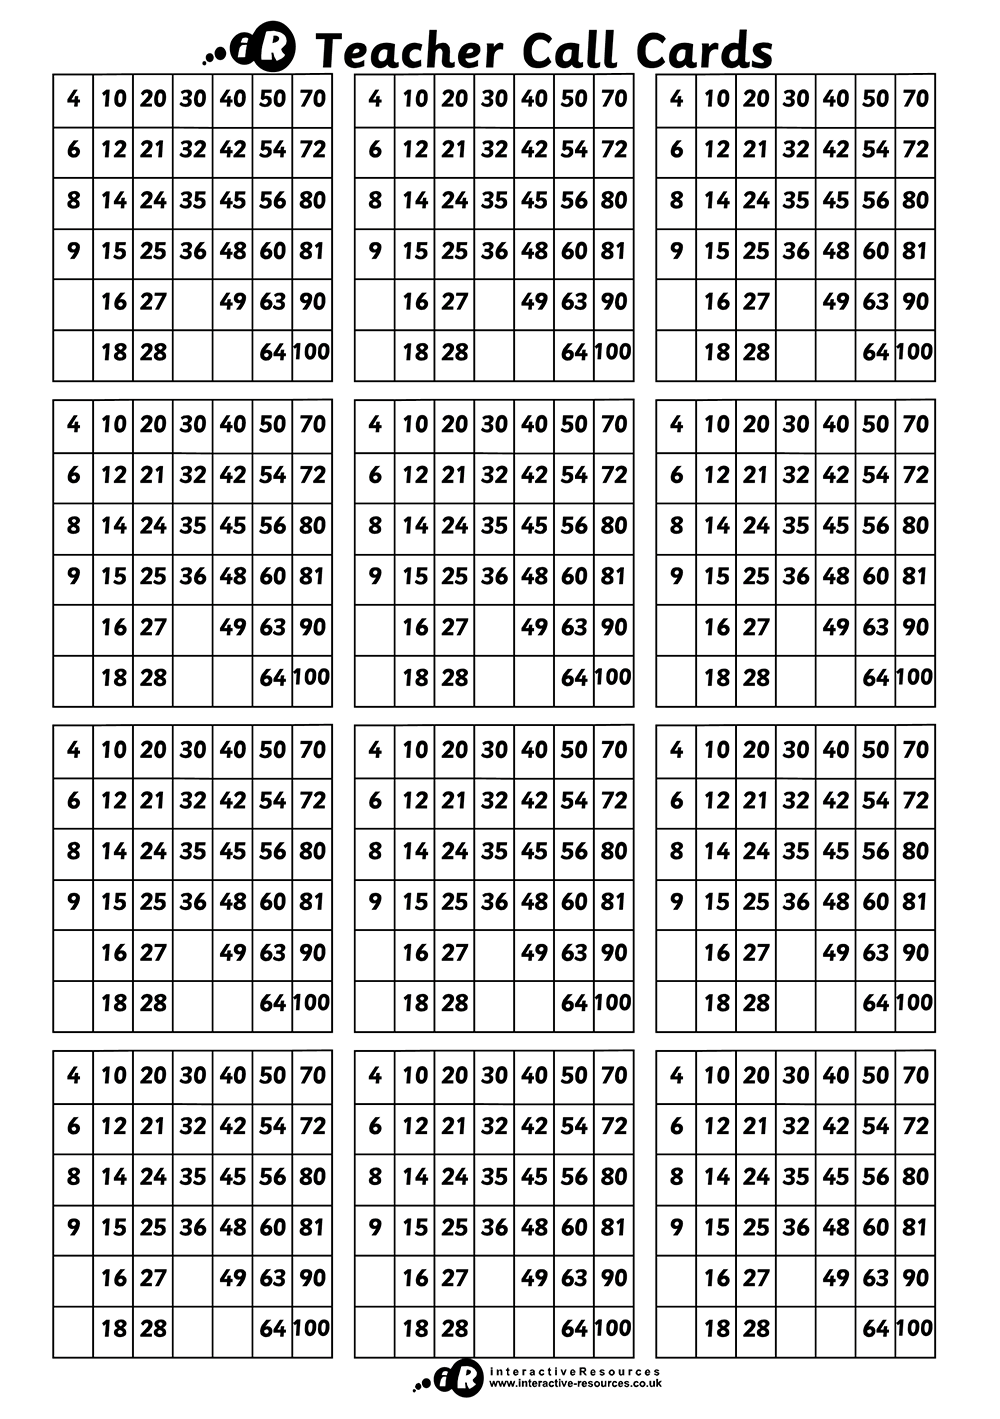 Times Tables Bingo Cards for Teachers